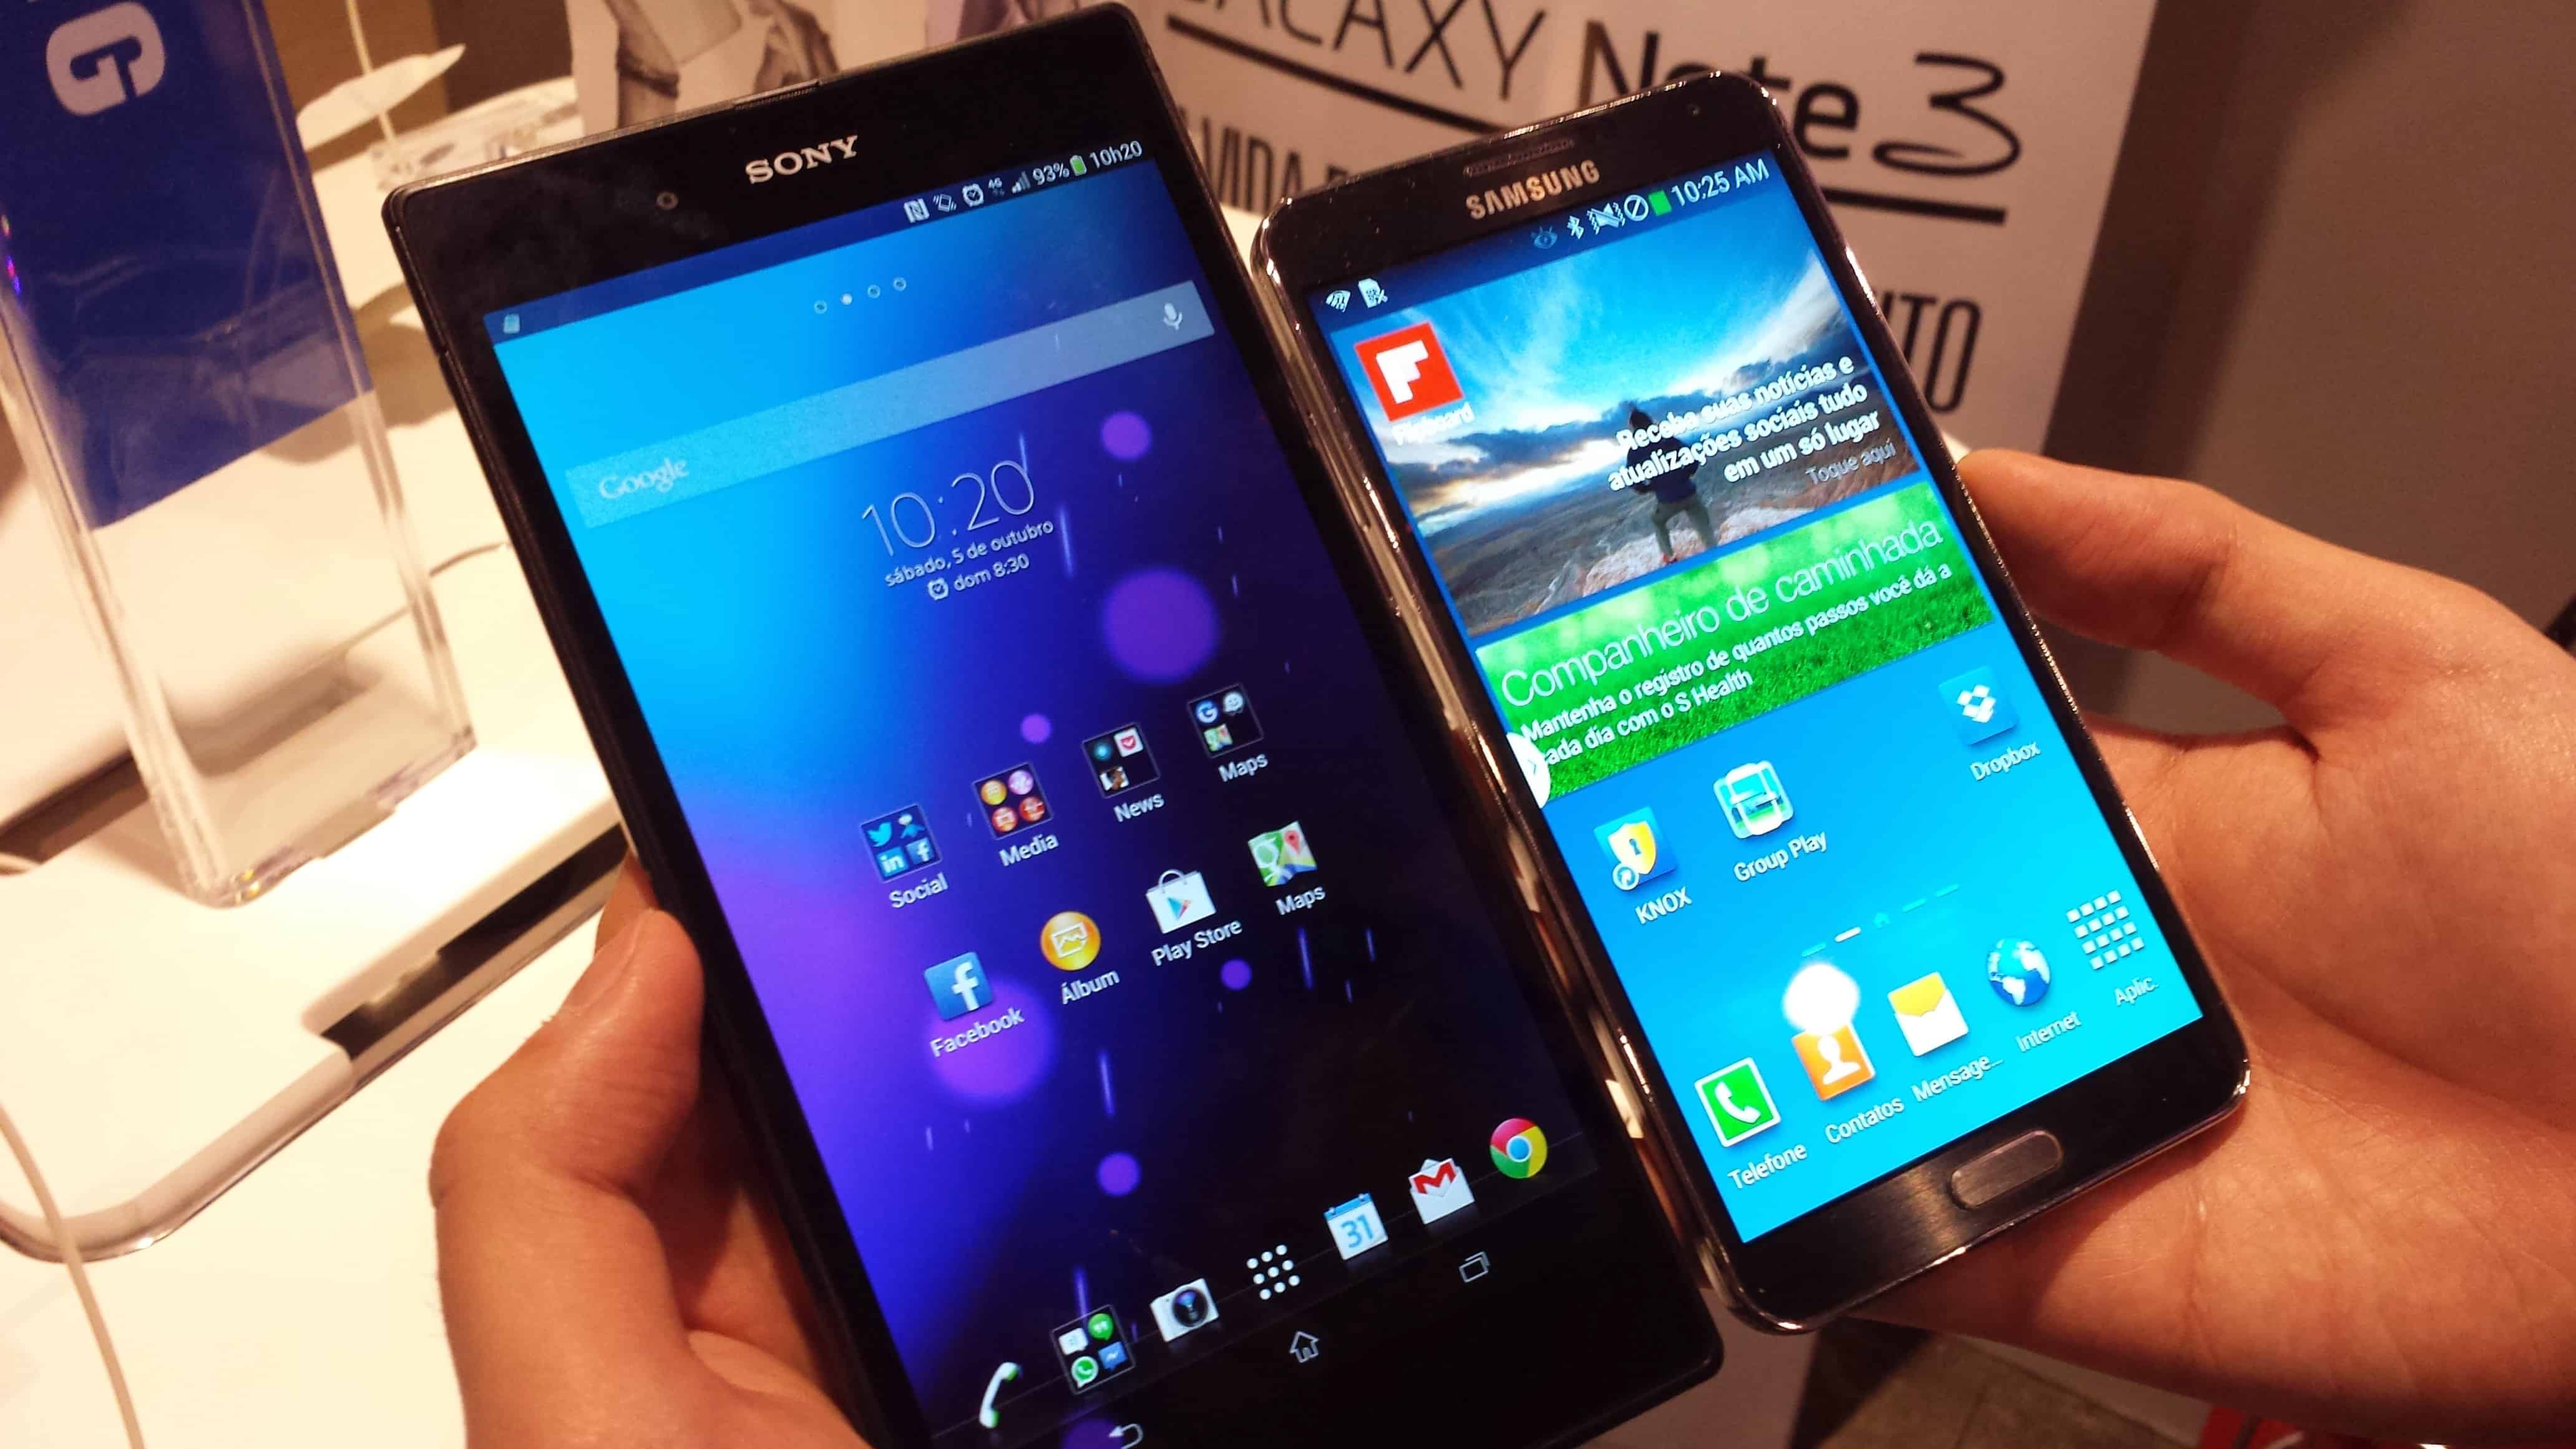 Vídeo compara o Galaxy Note 3 vs Xperia Z ultra 1